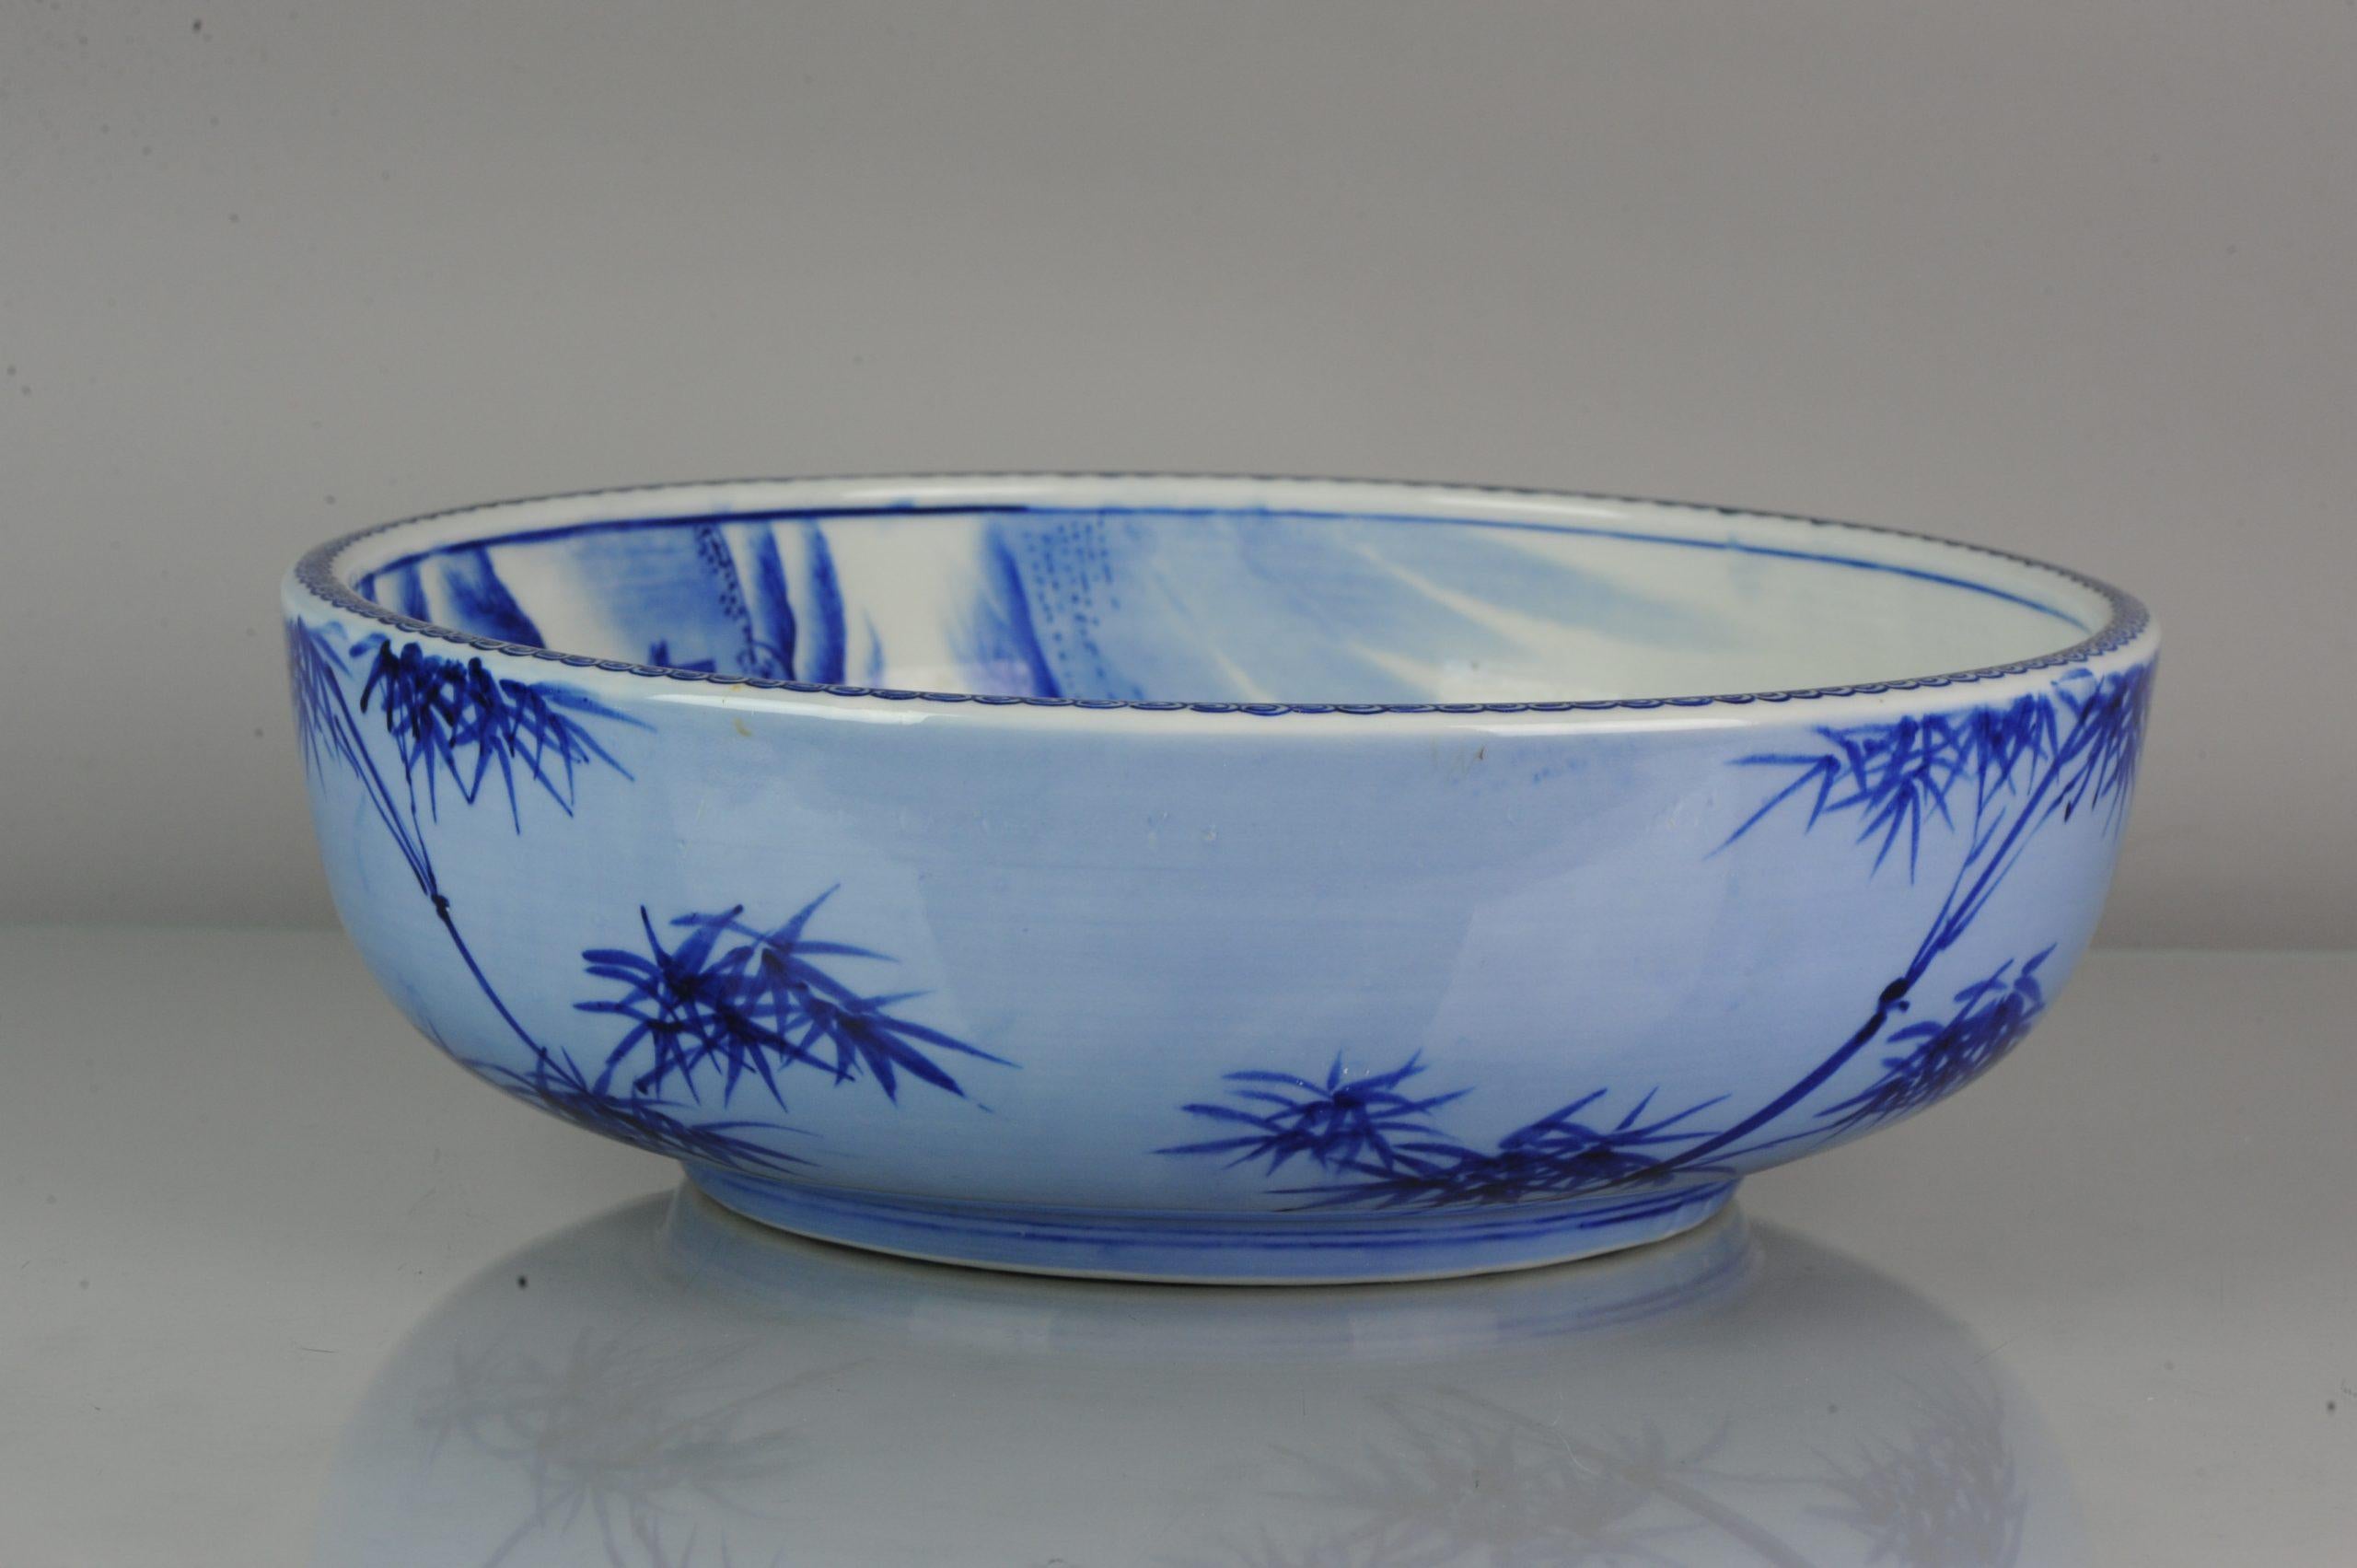 Earthenware Large Arita Bowl Beautifull Japanese Porcelain 19th Century Edo/Meiji Period For Sale